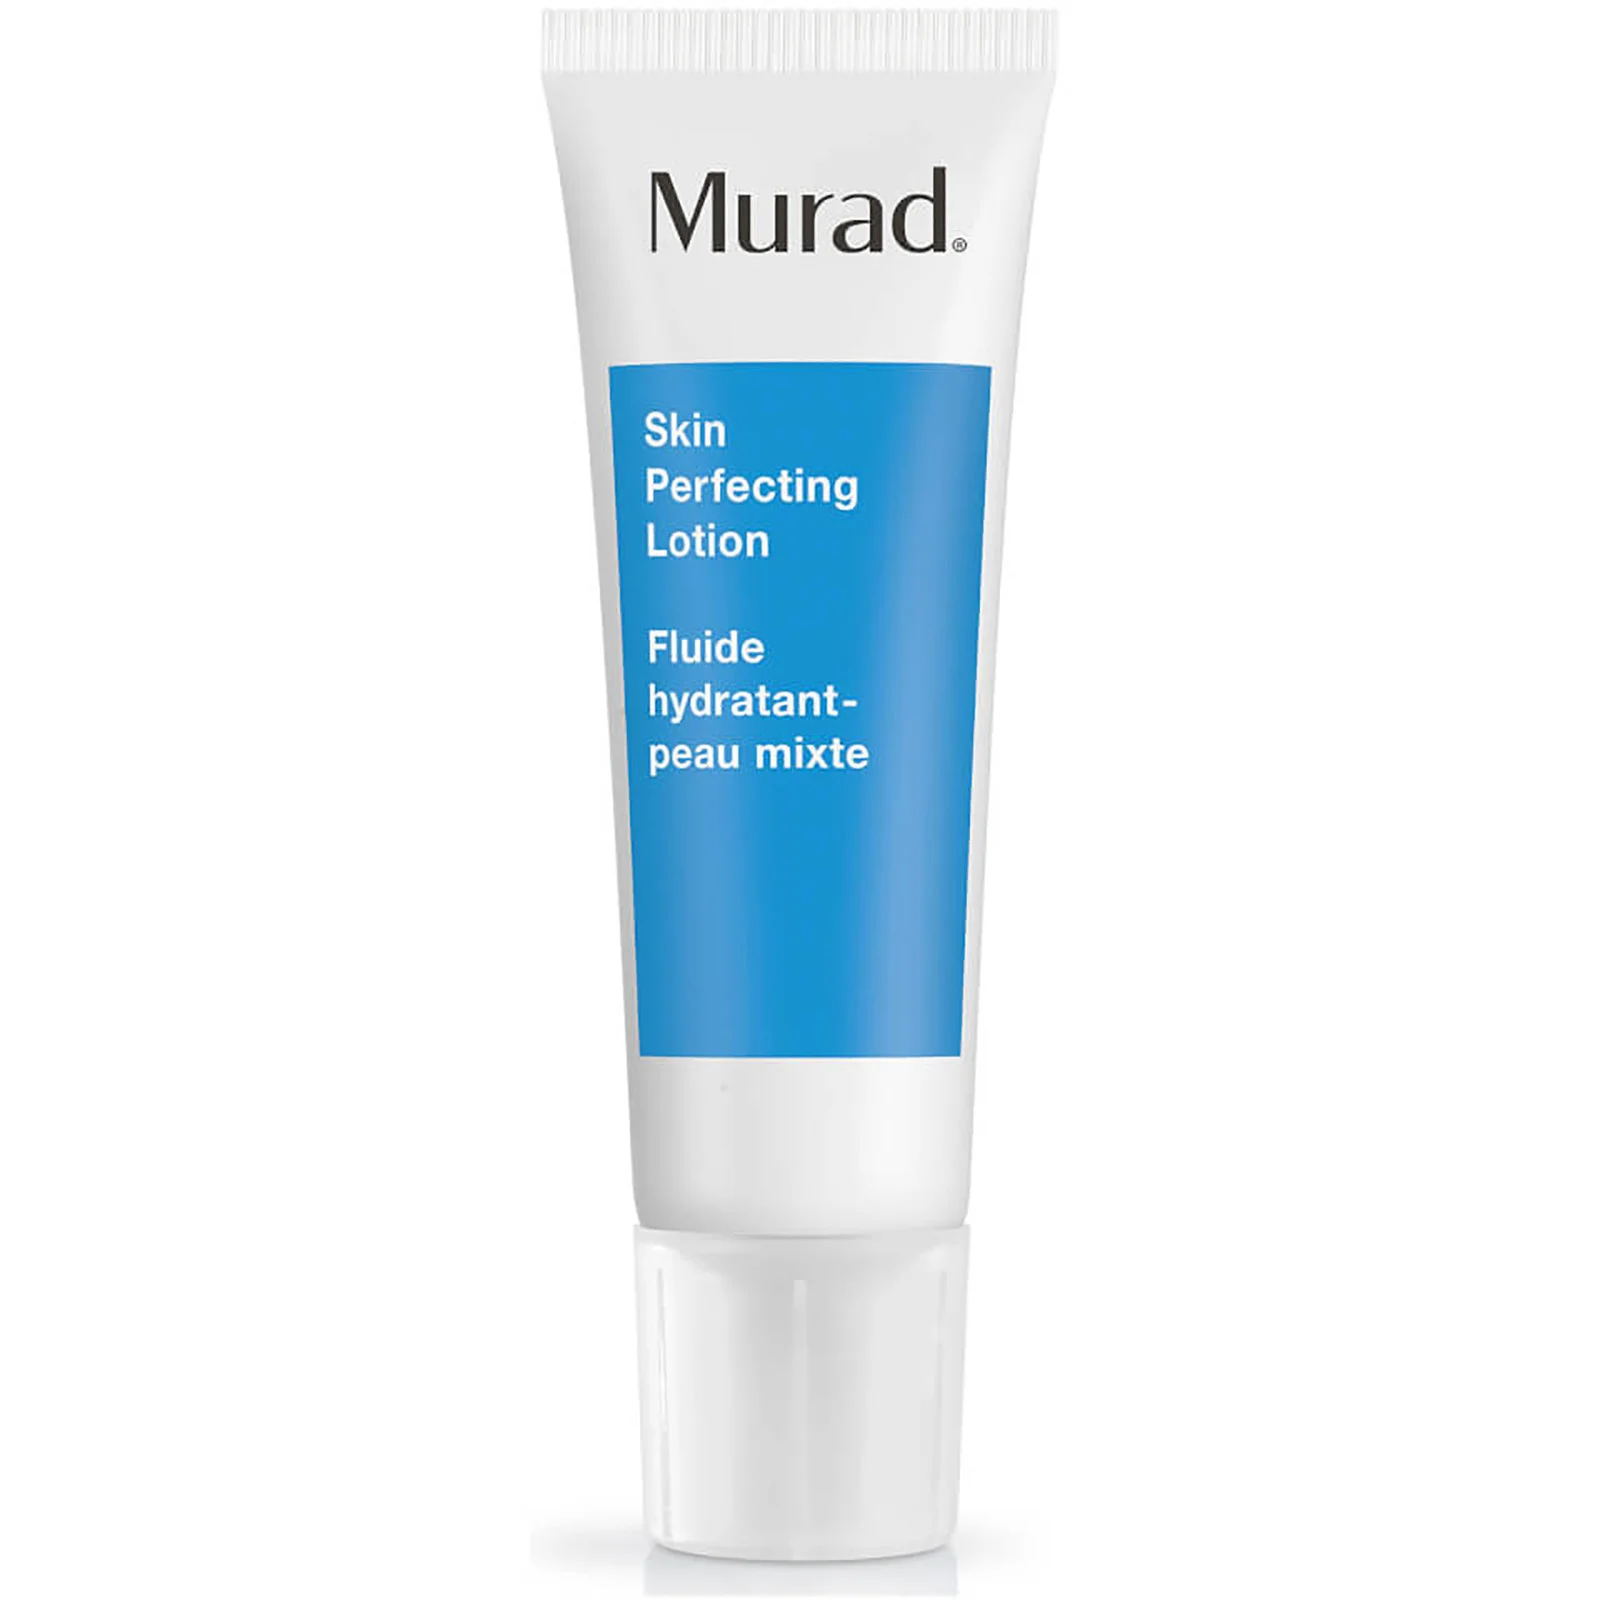 Murad Skin Perfecting Lotion - Oil Free 50ml Image 1